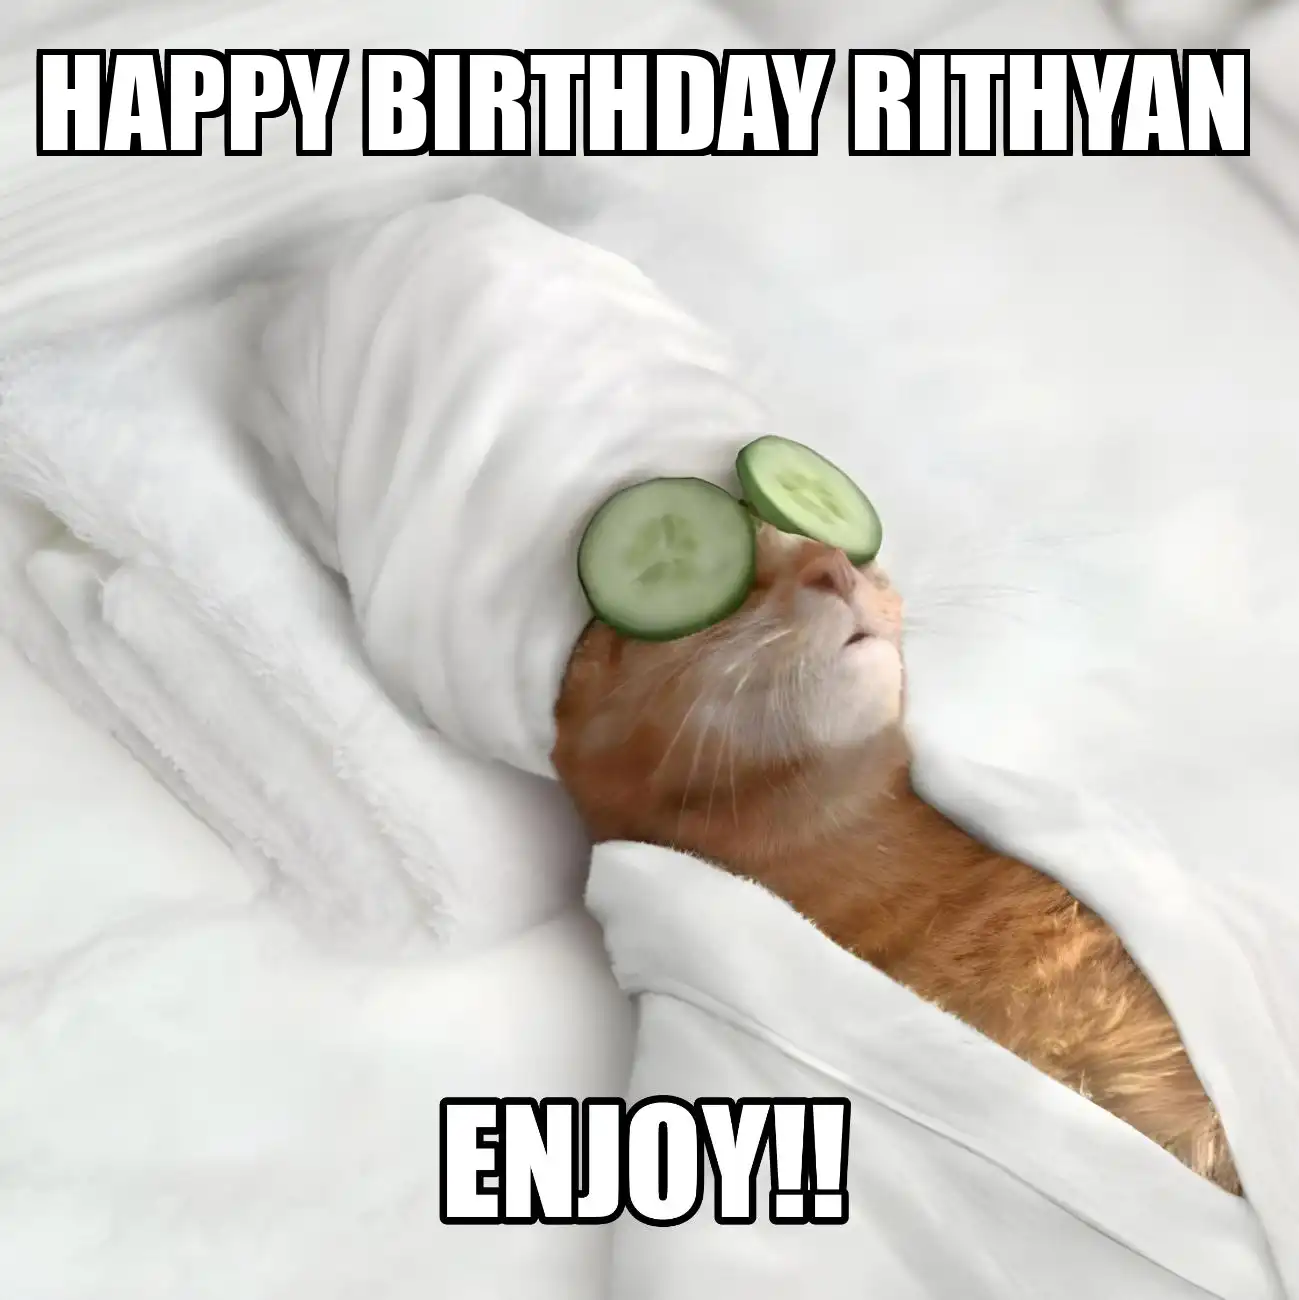 Happy Birthday Rithyan Enjoy Cat Meme